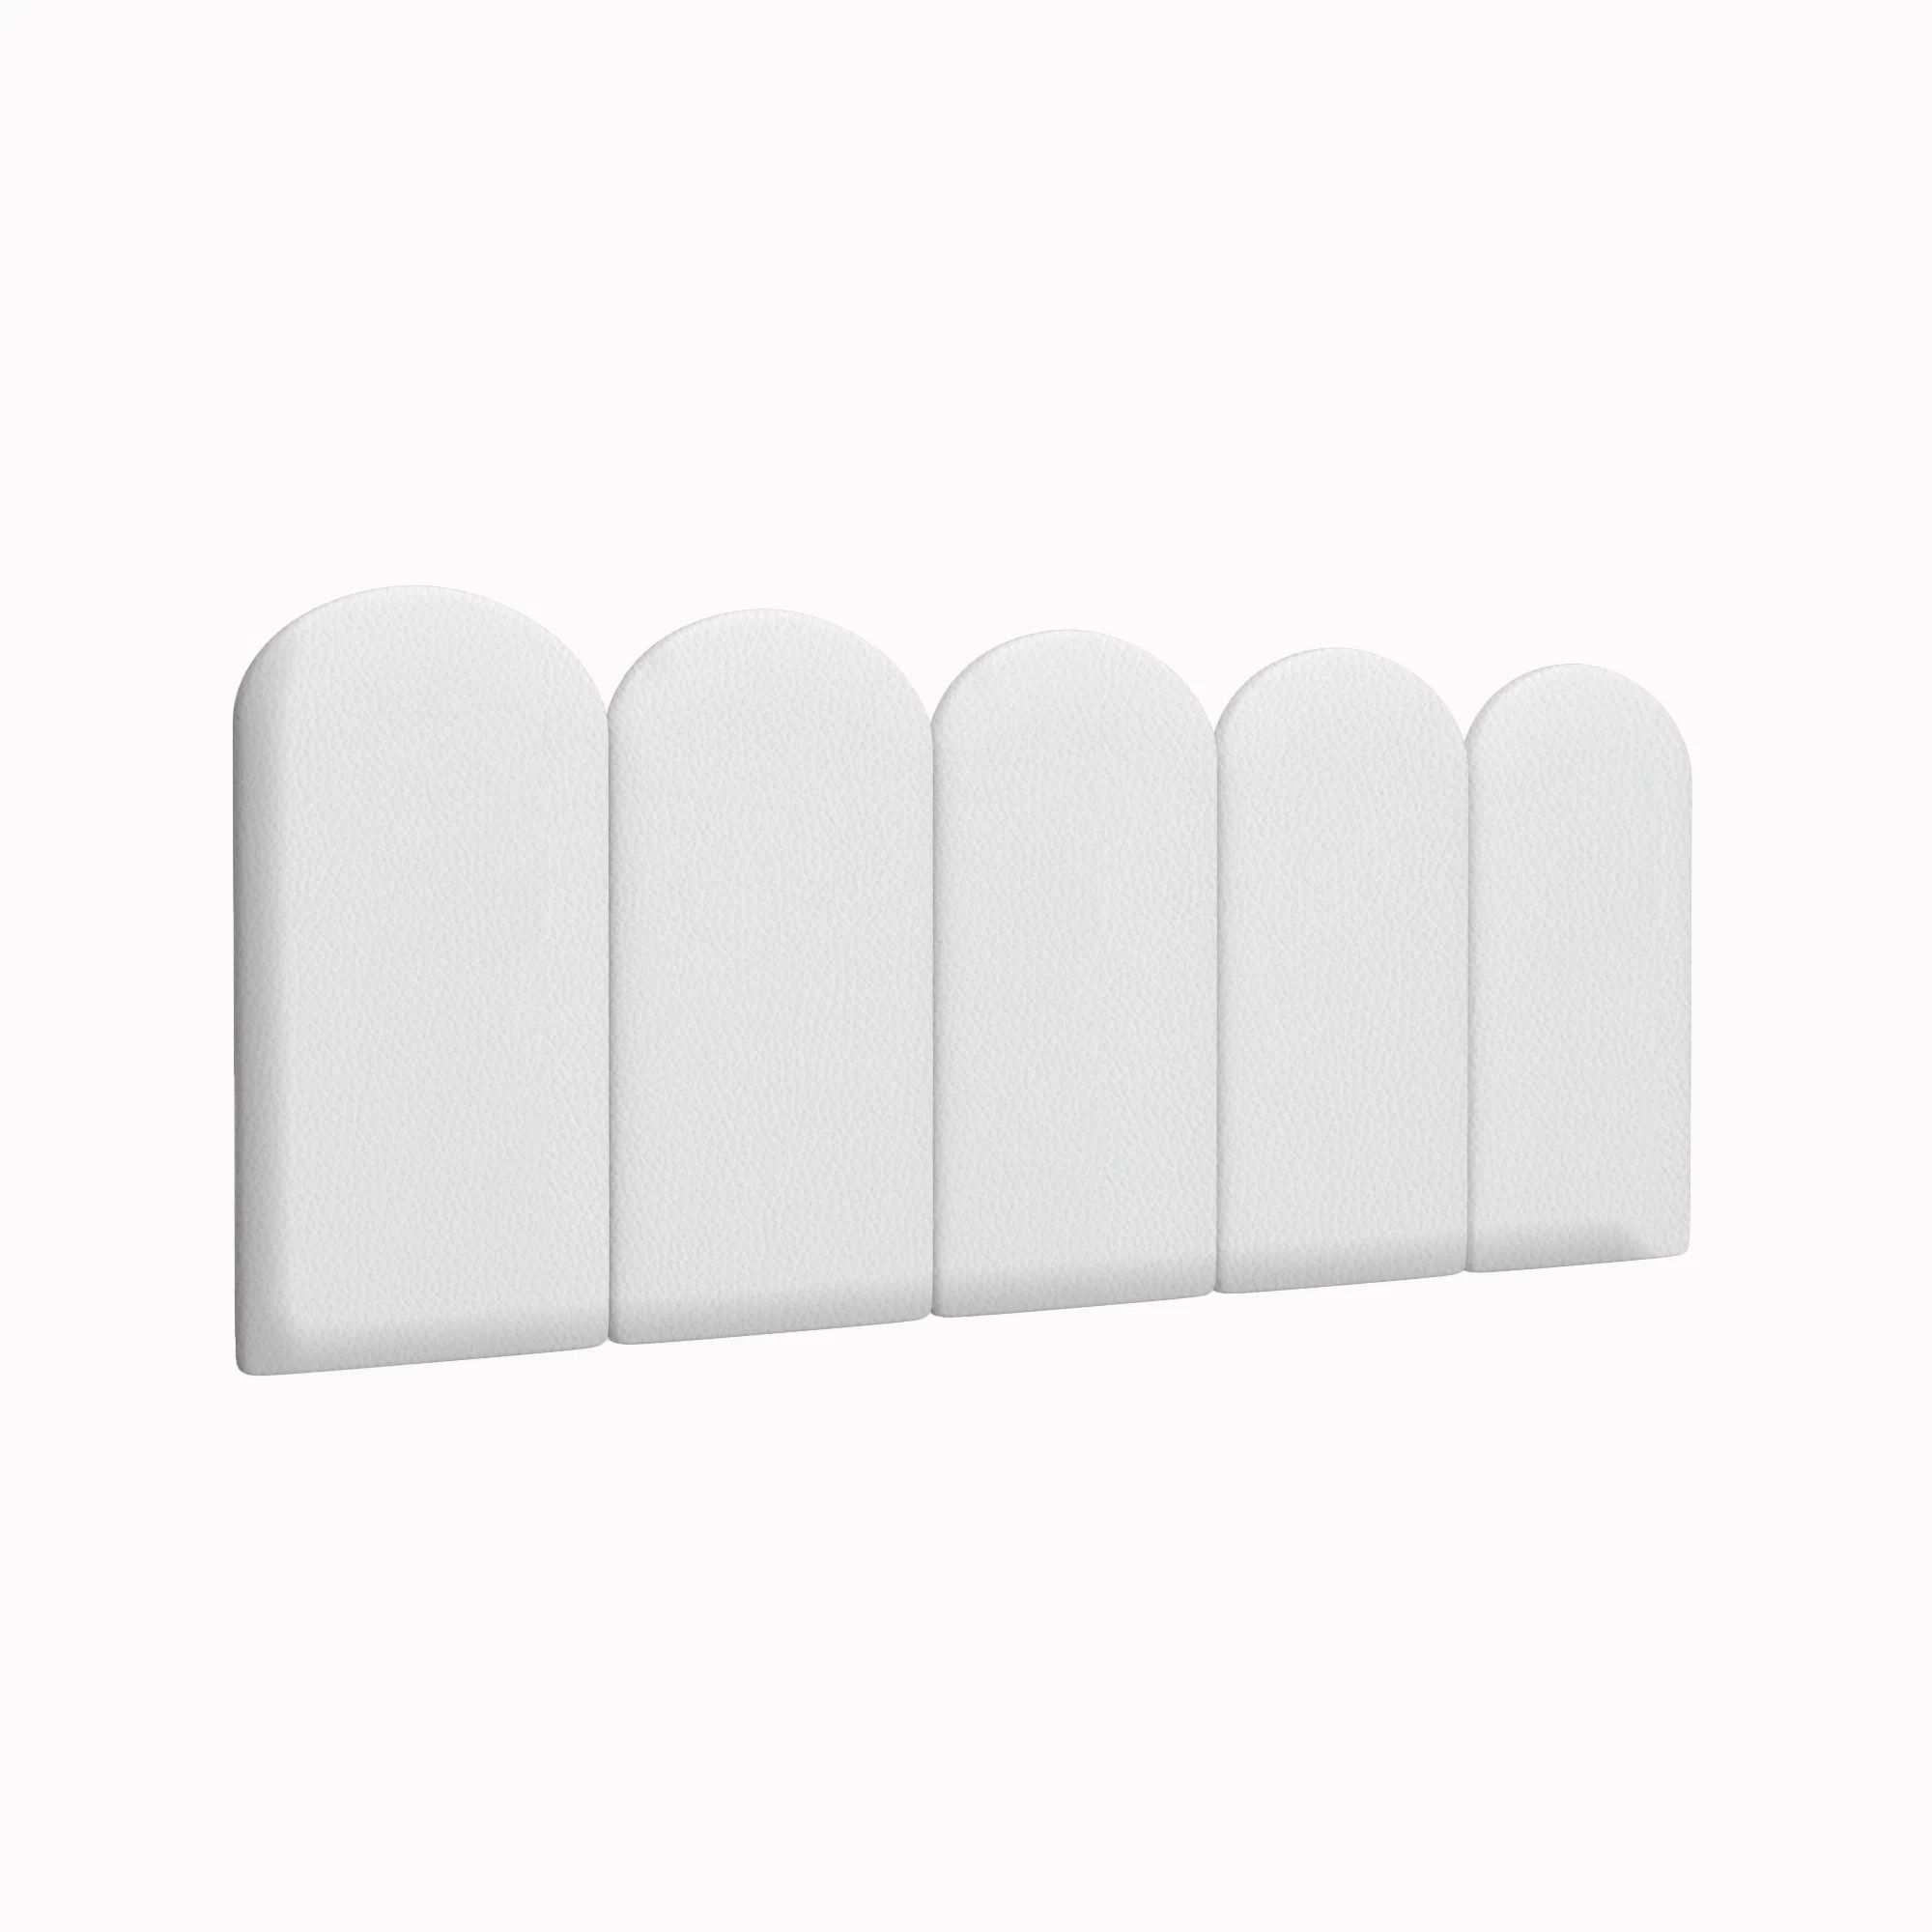 Стеновая панель Eco Leather White 30х60R см 4 шт.